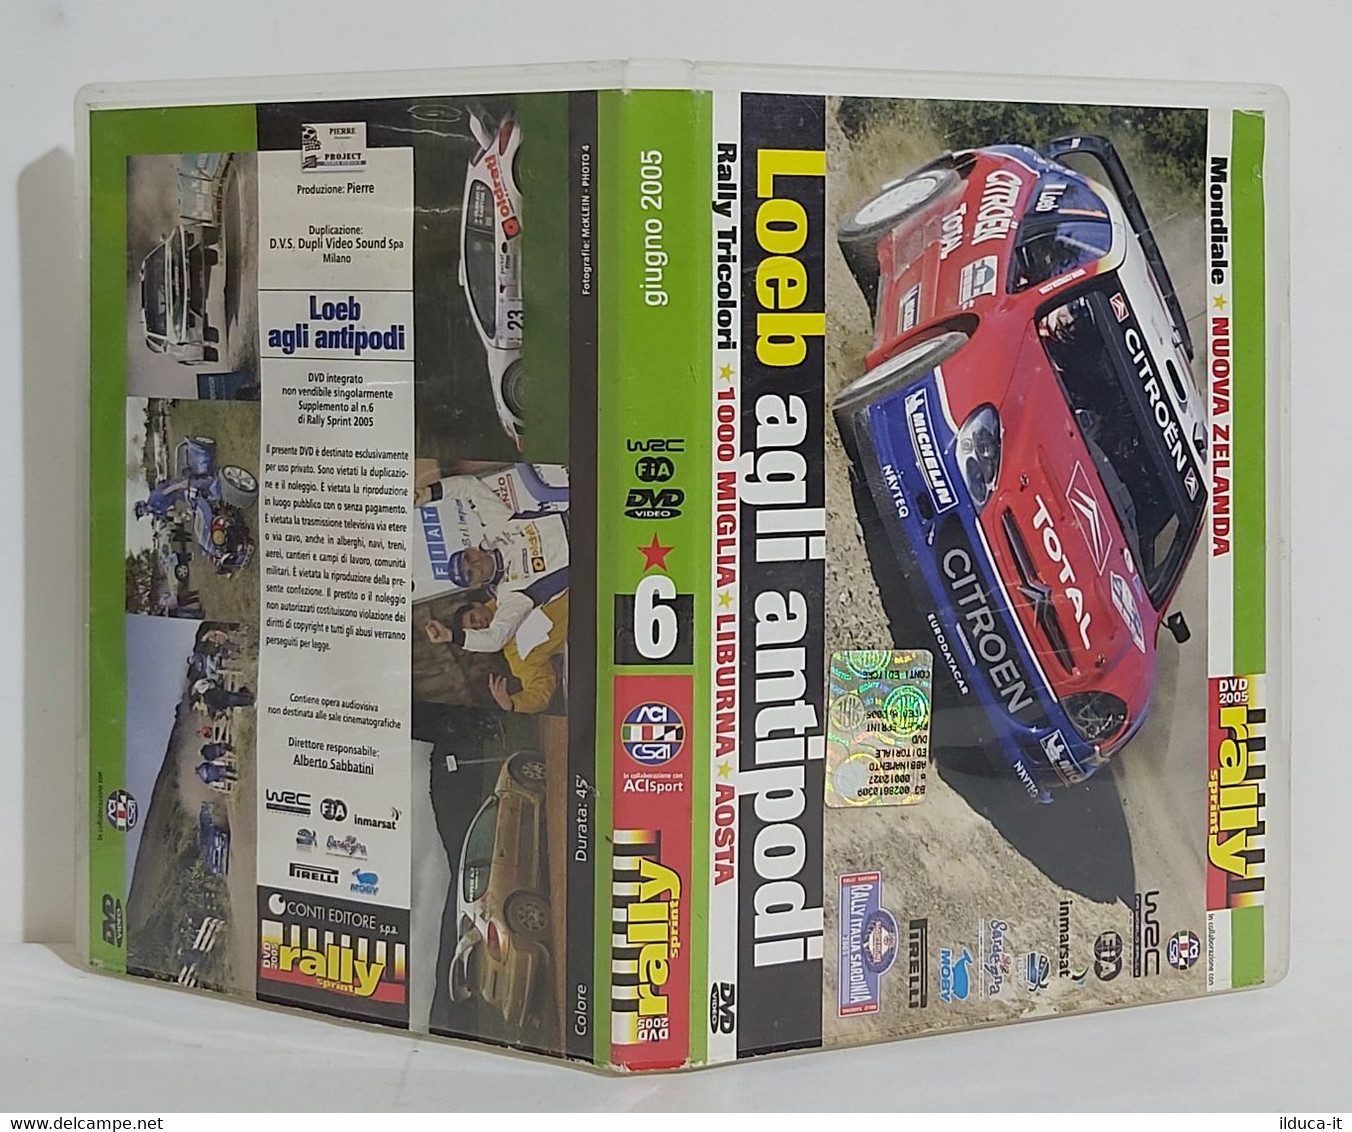 I101816 DVD - Rally Sprint Giugno 2005 N. 6 - Loeb Agli Antipodi - Deporte